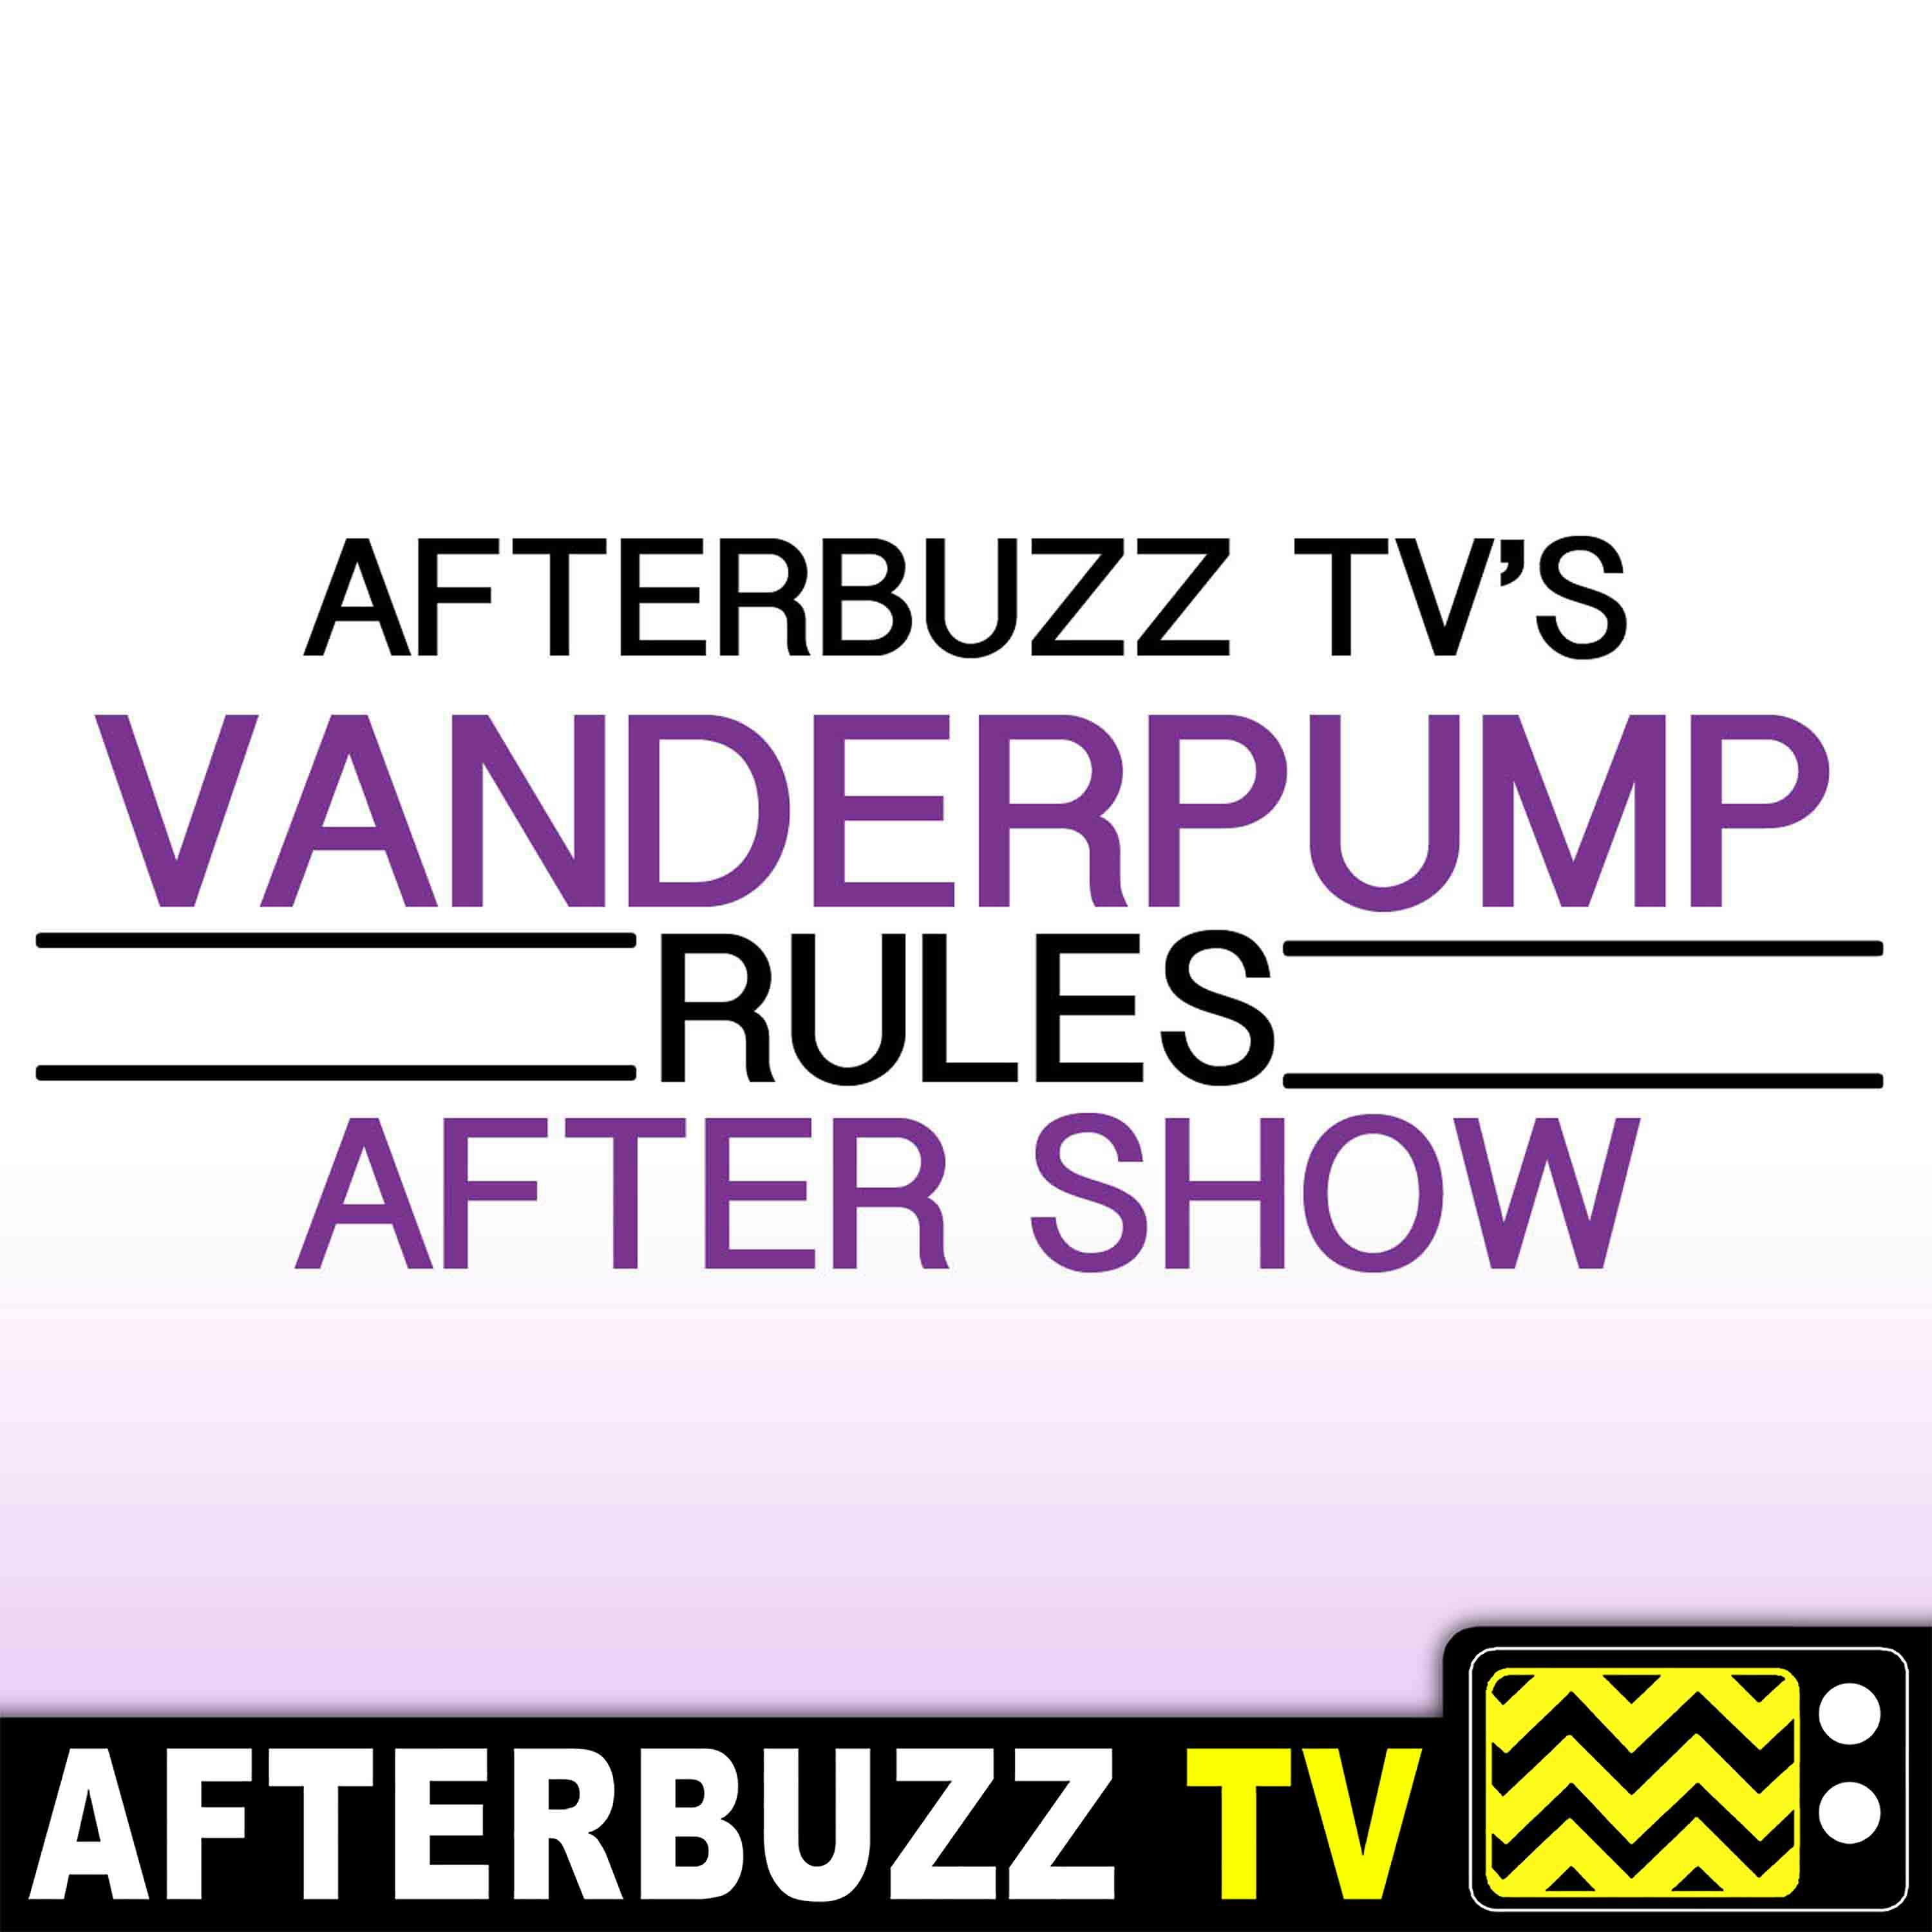 ”End of an Era” Season 7 Episode 18 ’Vanderpump Rules’ Review